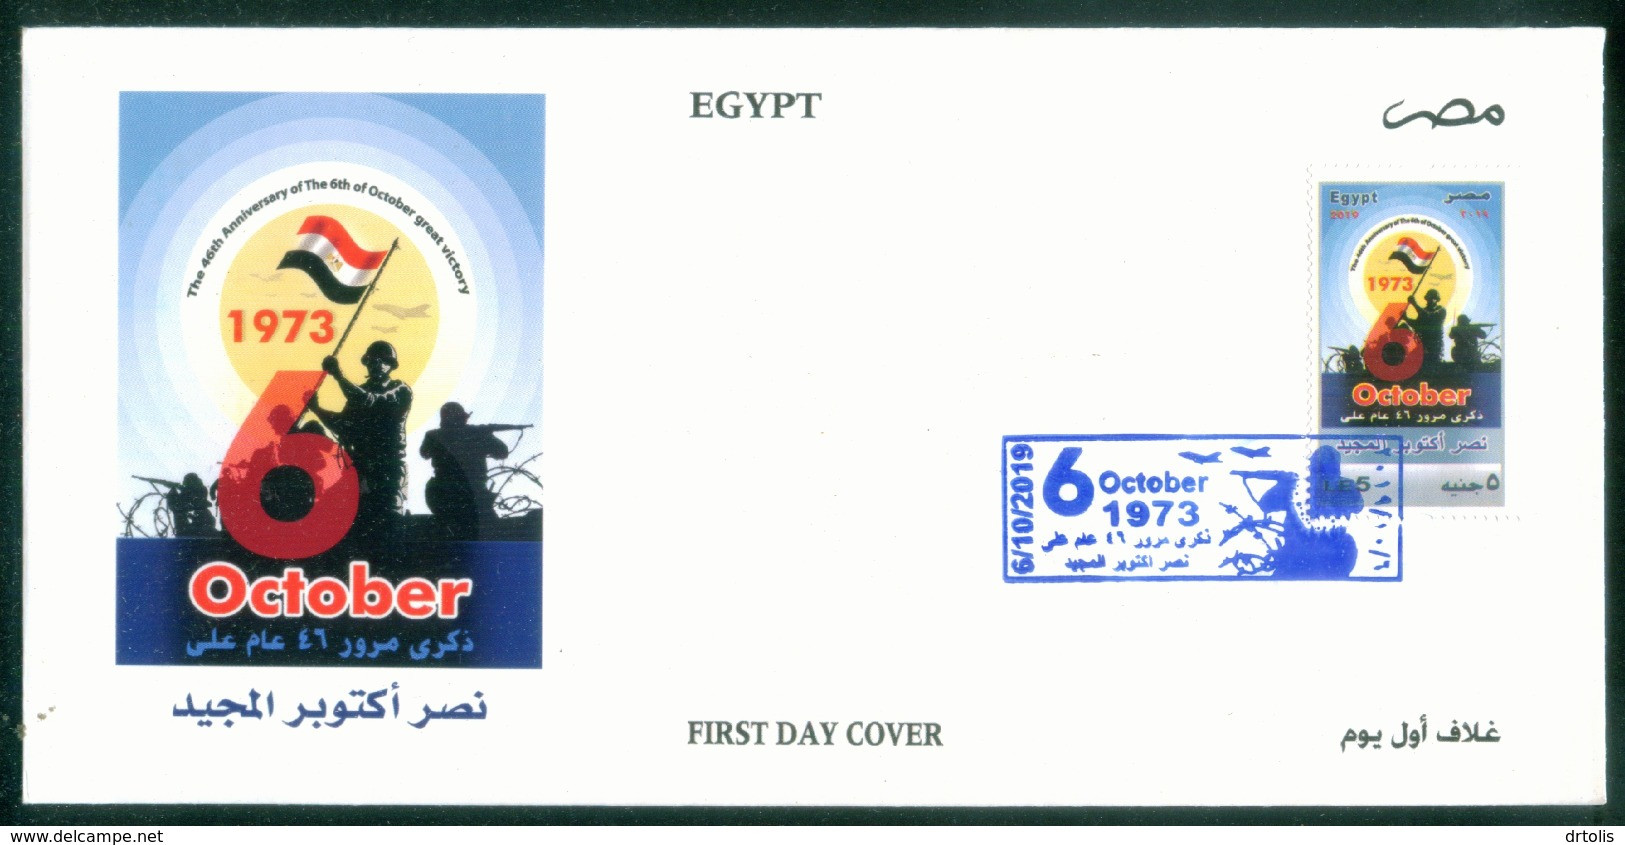 EGYPT / ISRAEL / 2019 / 6TH OCTOBER WAR / YOM KIPPUR / FLAG / SOLDIERS / GUNS / BARBED WIRE / FDC - Briefe U. Dokumente